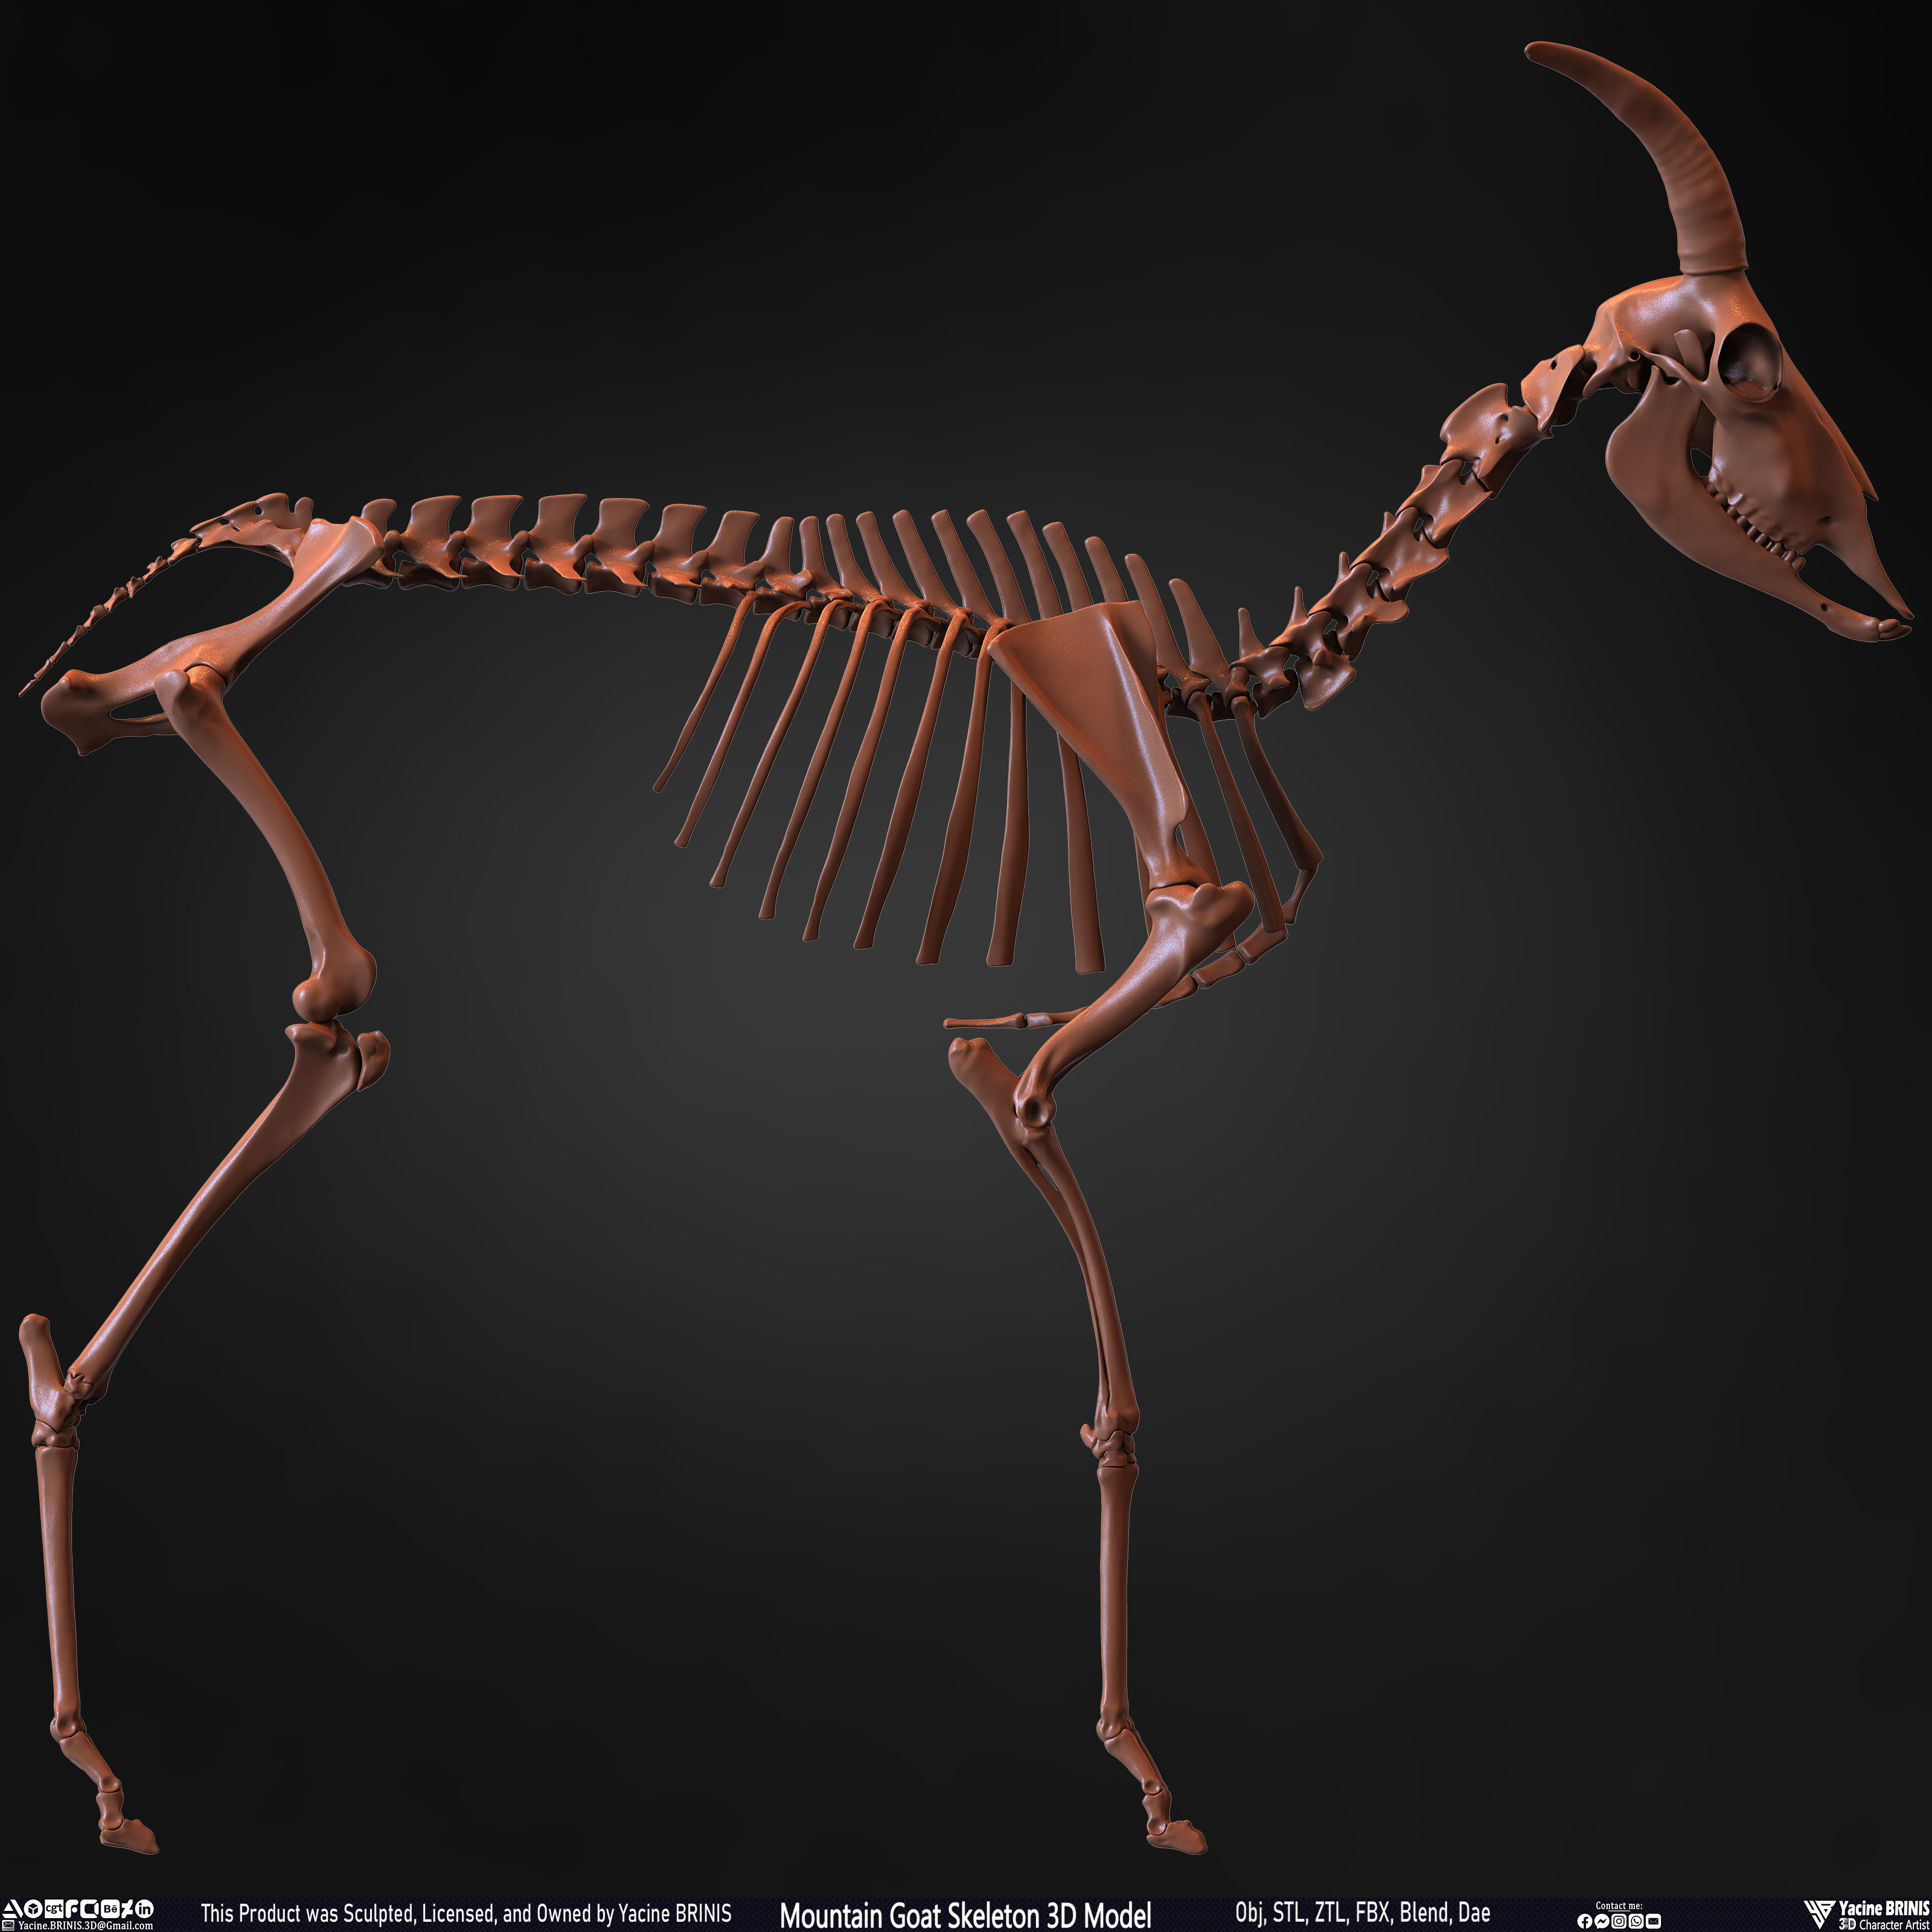 Mountain Goat Skeleton 3D Model Sculpted by Yacine BRINIS Set 023